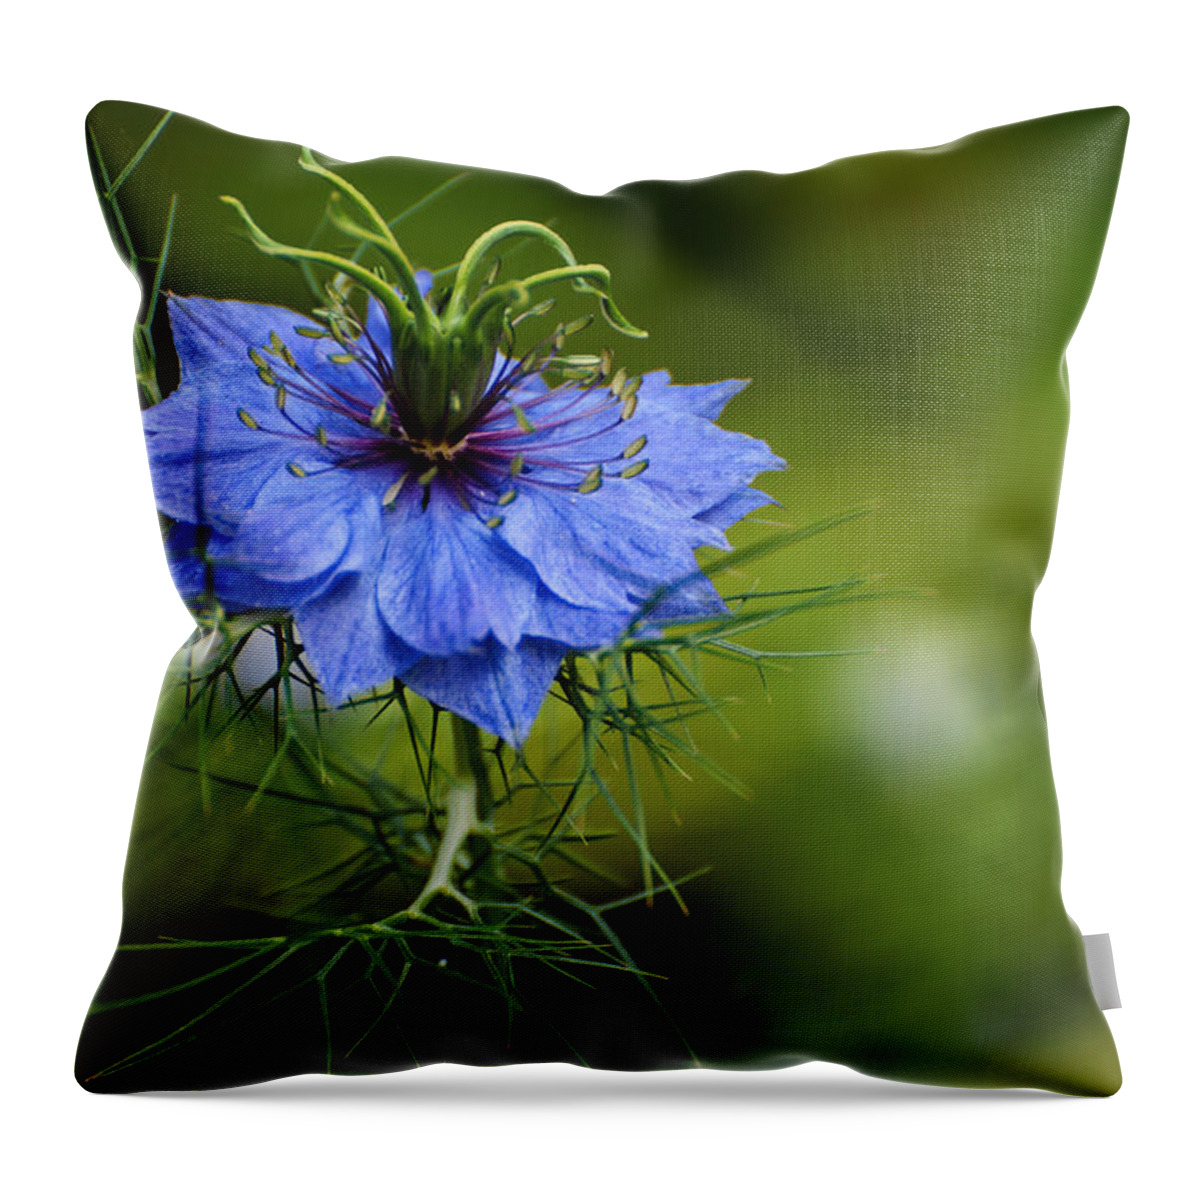 Flower Throw Pillow featuring the photograph Nigella Damascena by Rob Hemphill